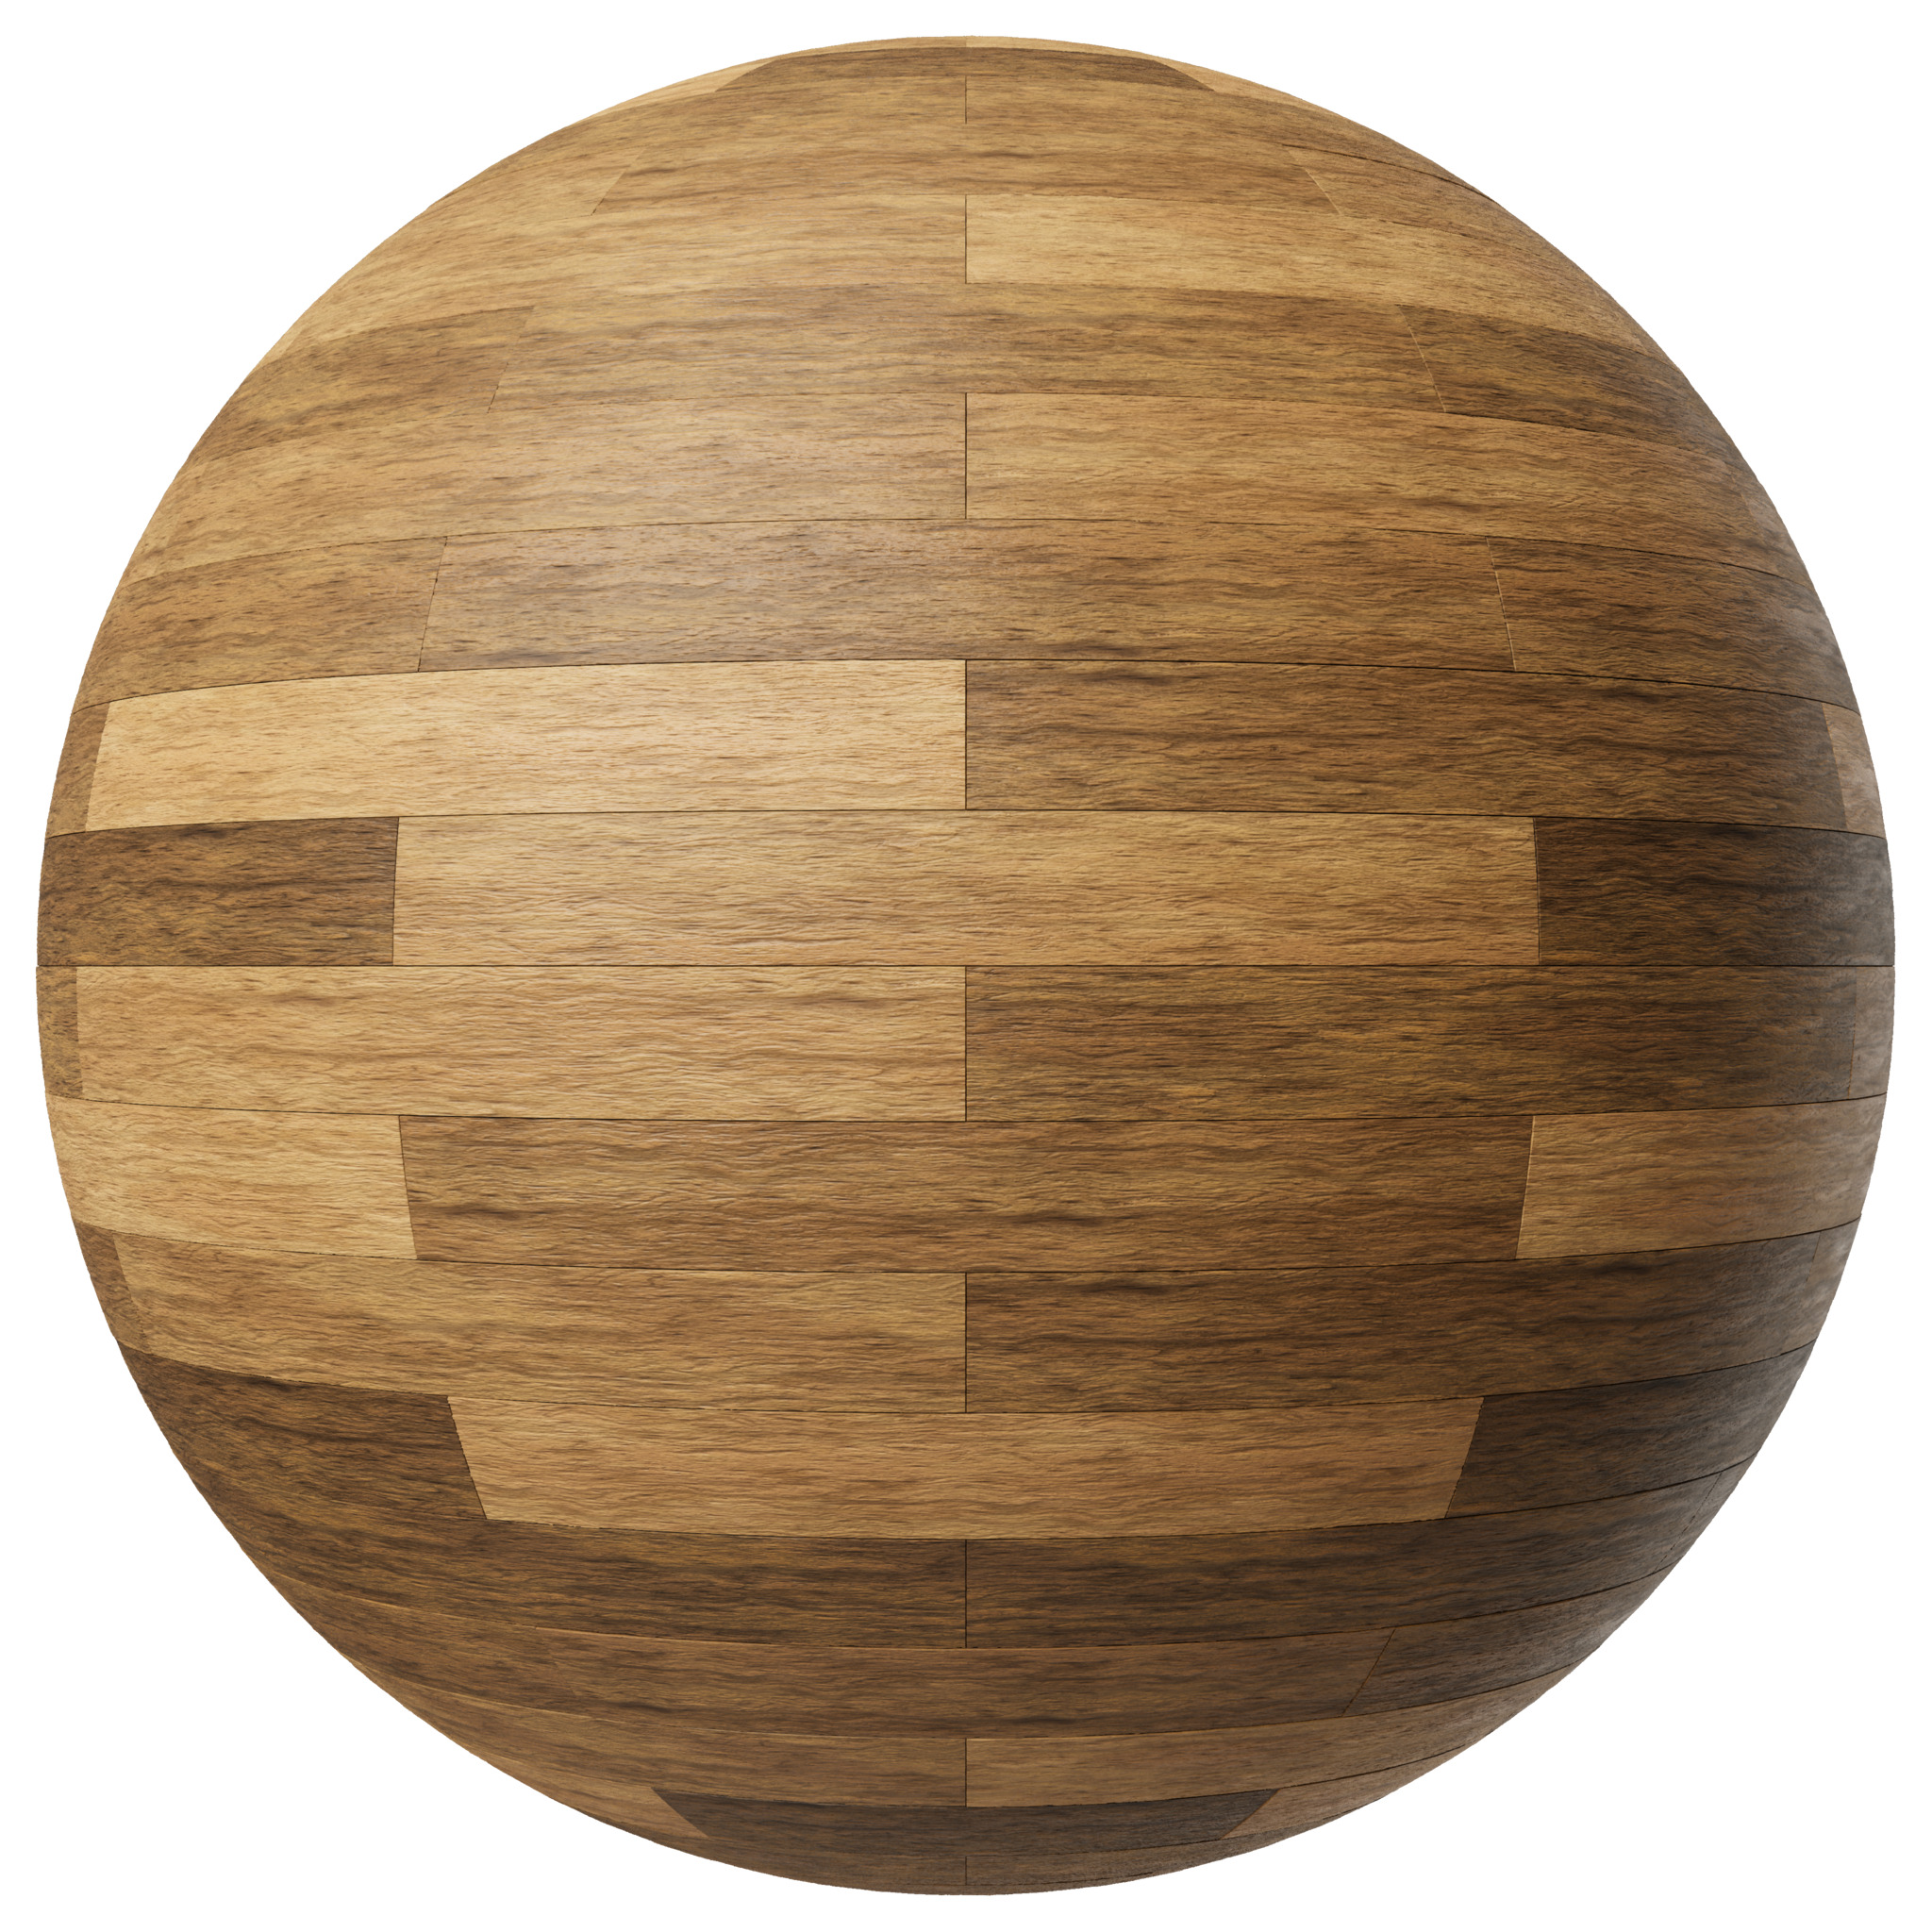 Wood Floor 007 On Ambientcg